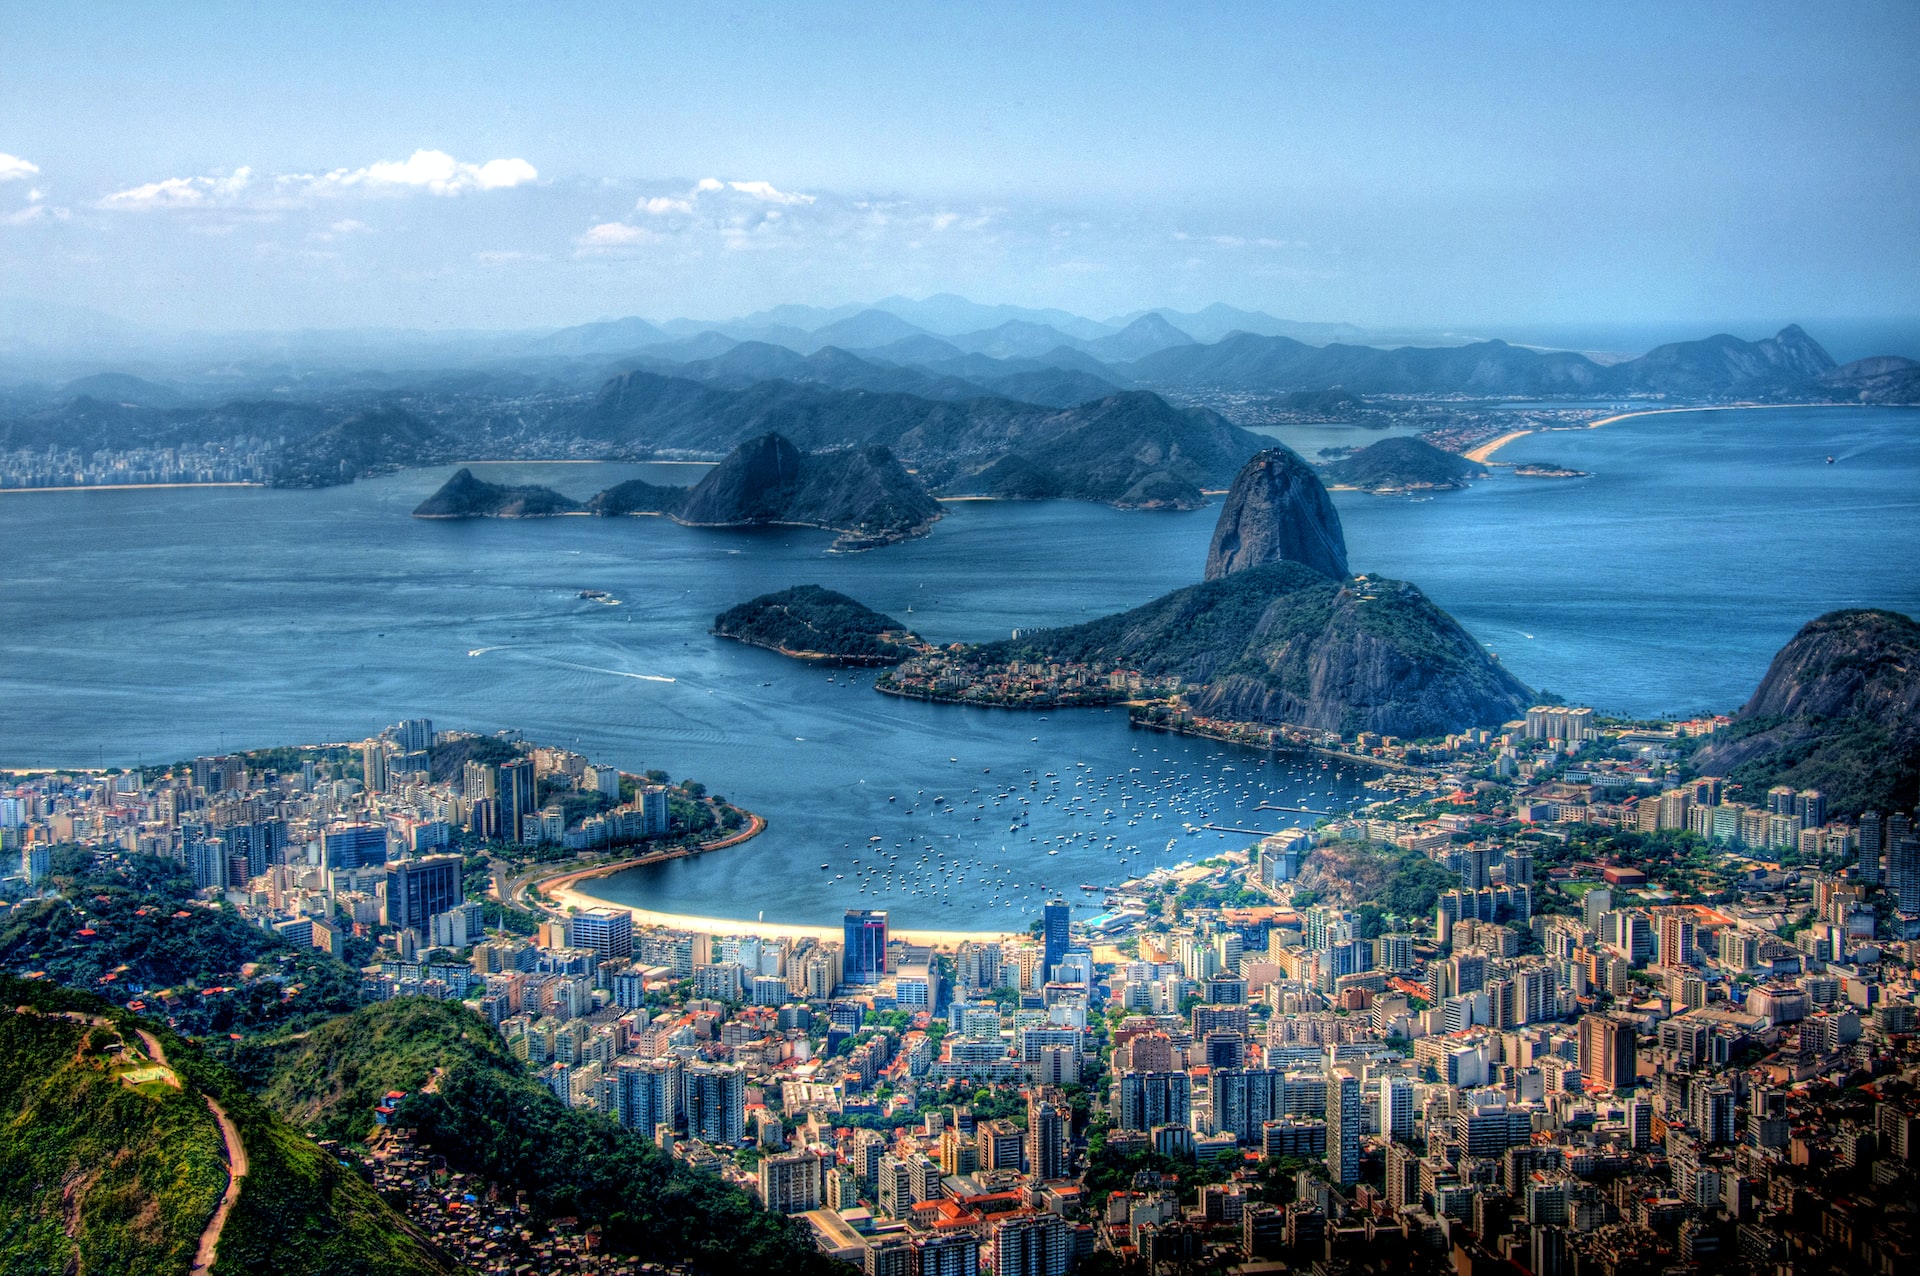 Visit Rio de Janeiro in Brazil
